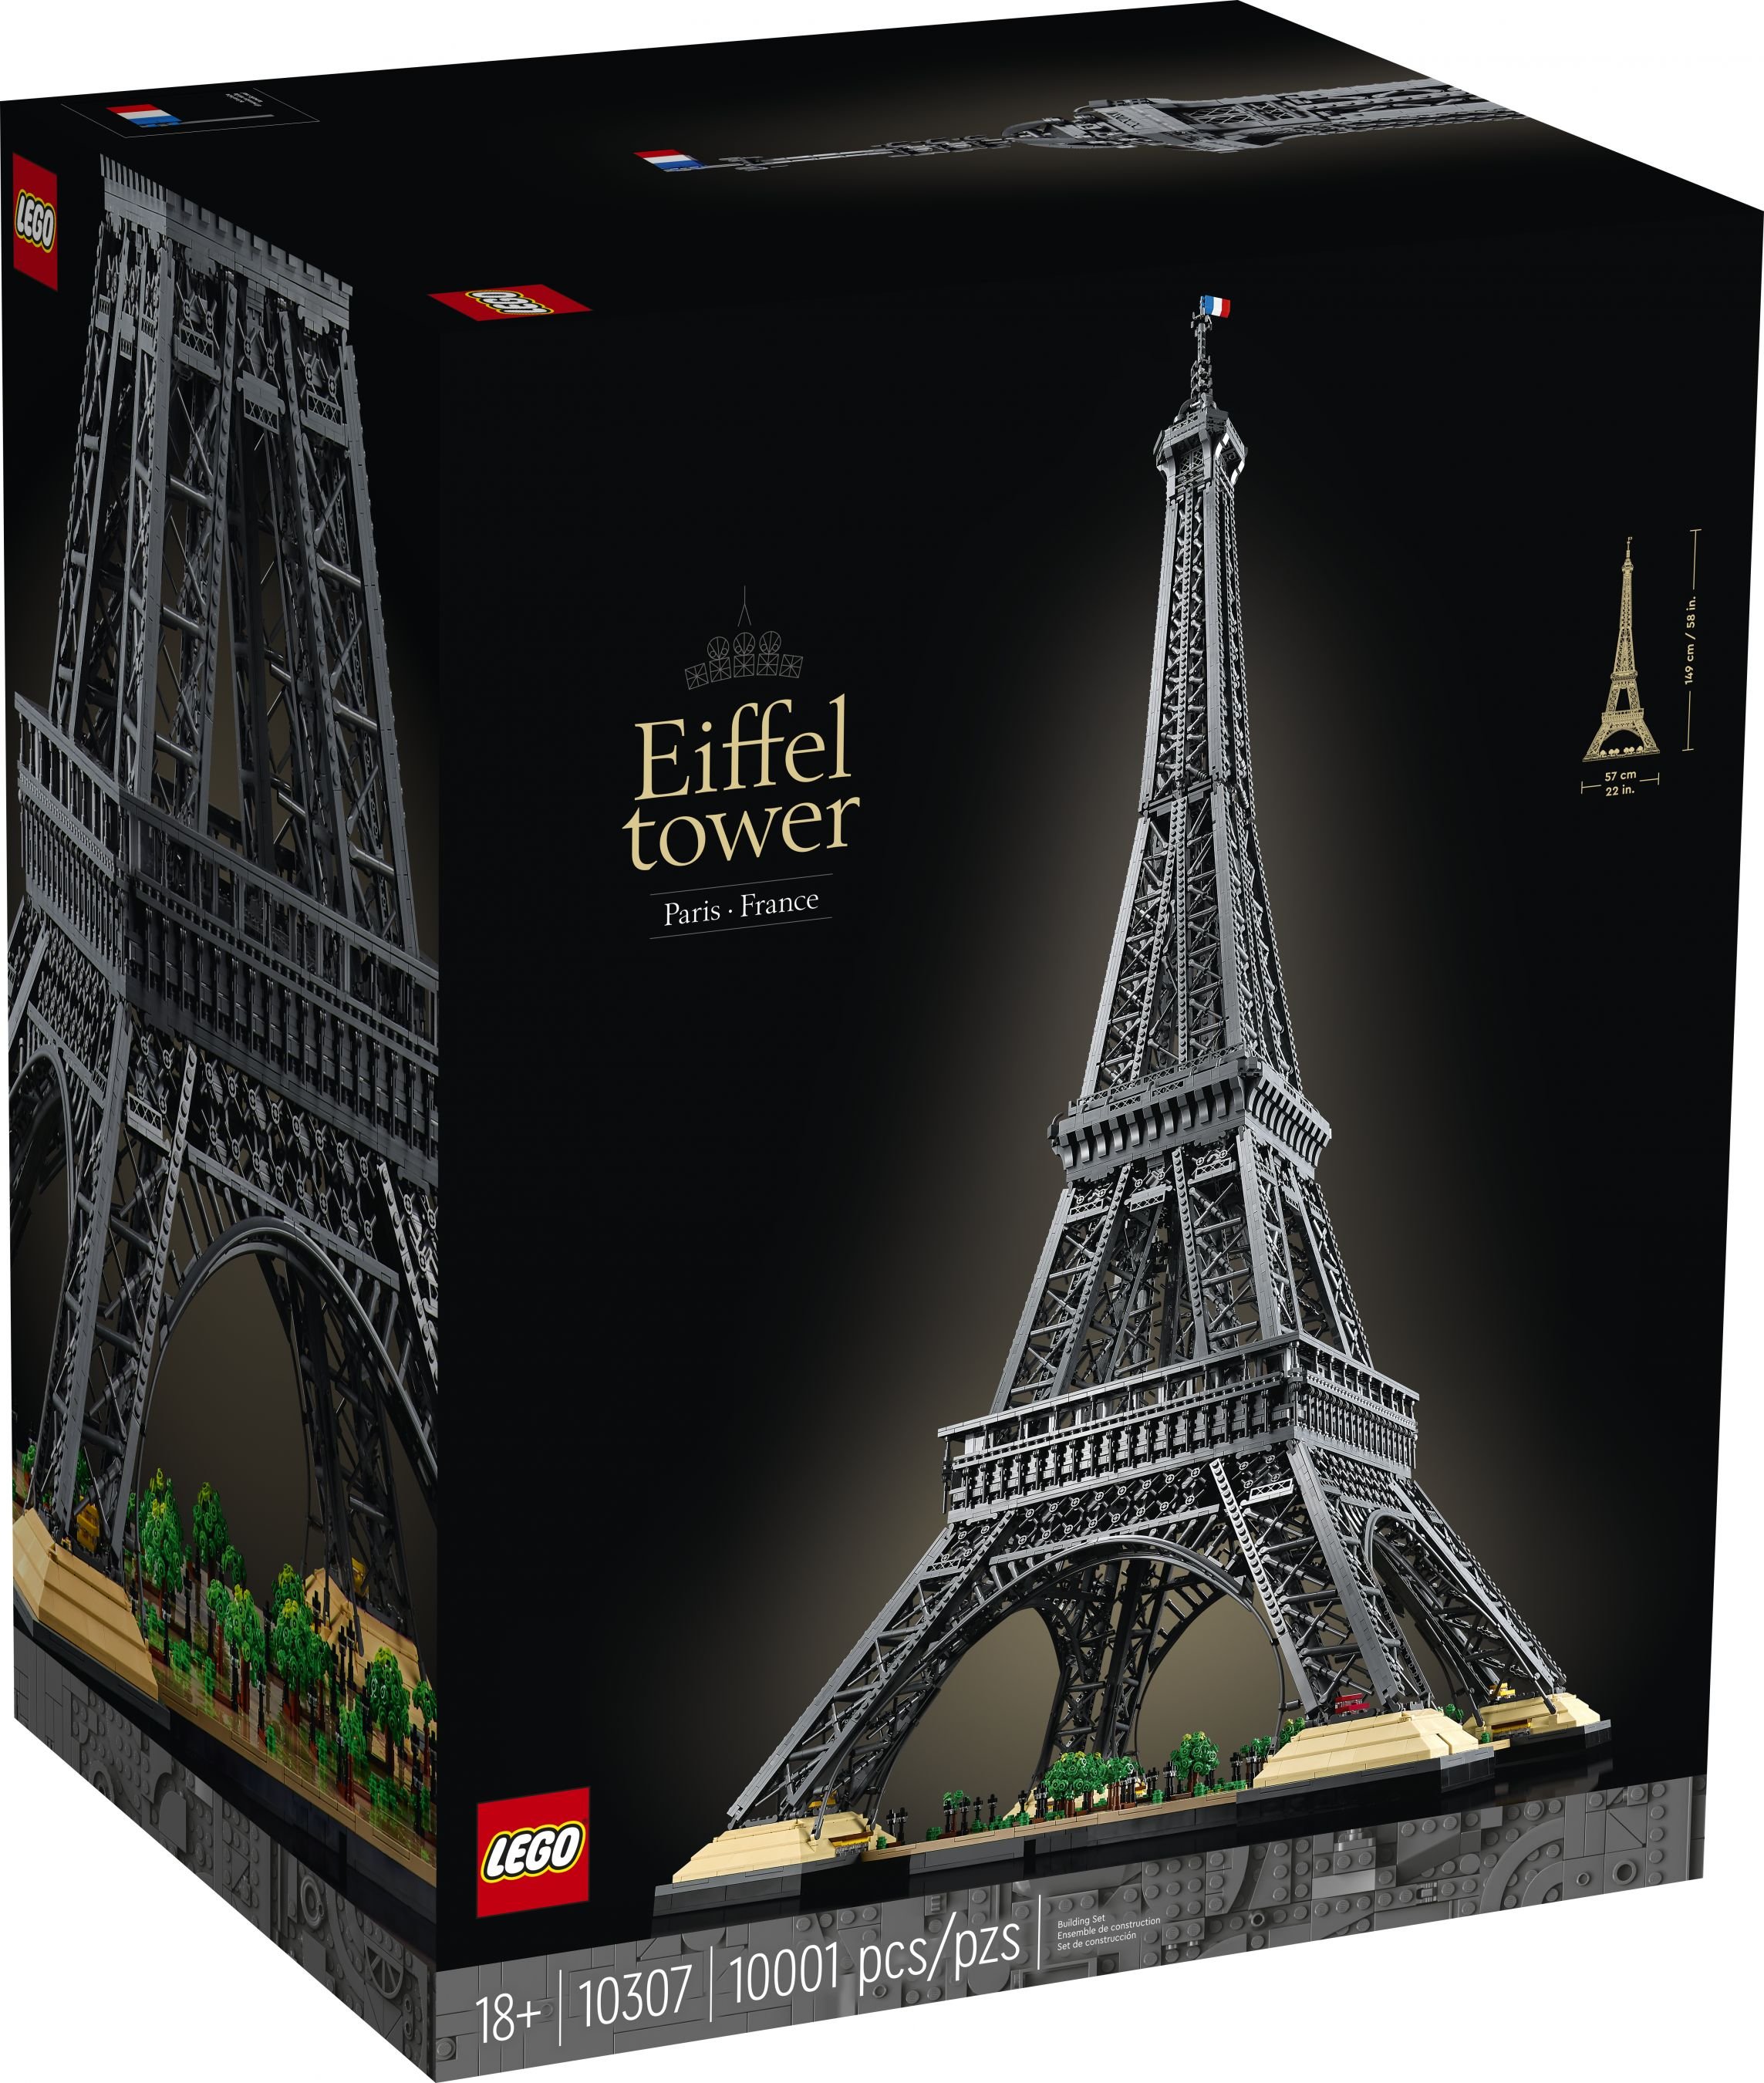 LEGO Advanced Models 10307 Eiffelturm Paris LEGO_10307_Box1_V39.jpg